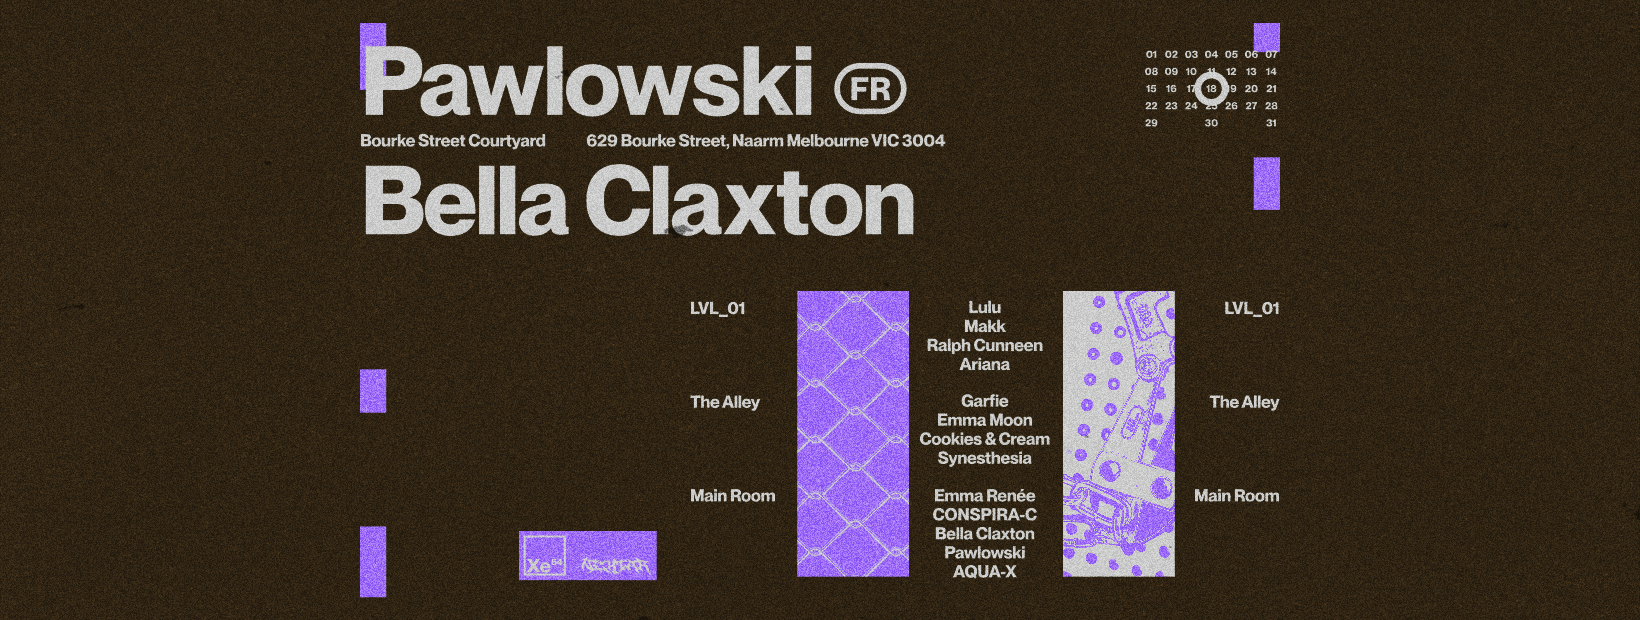 Xe54 ▬ Pawlowski (FR) + Bella Claxton - Página frontal